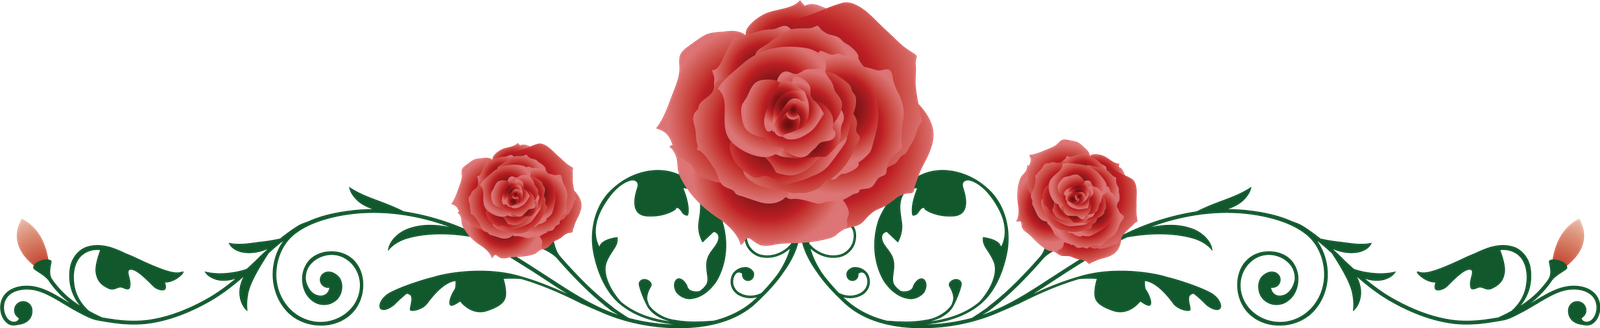 Download Rose Vine Border Horizontal Rose Clipartkey